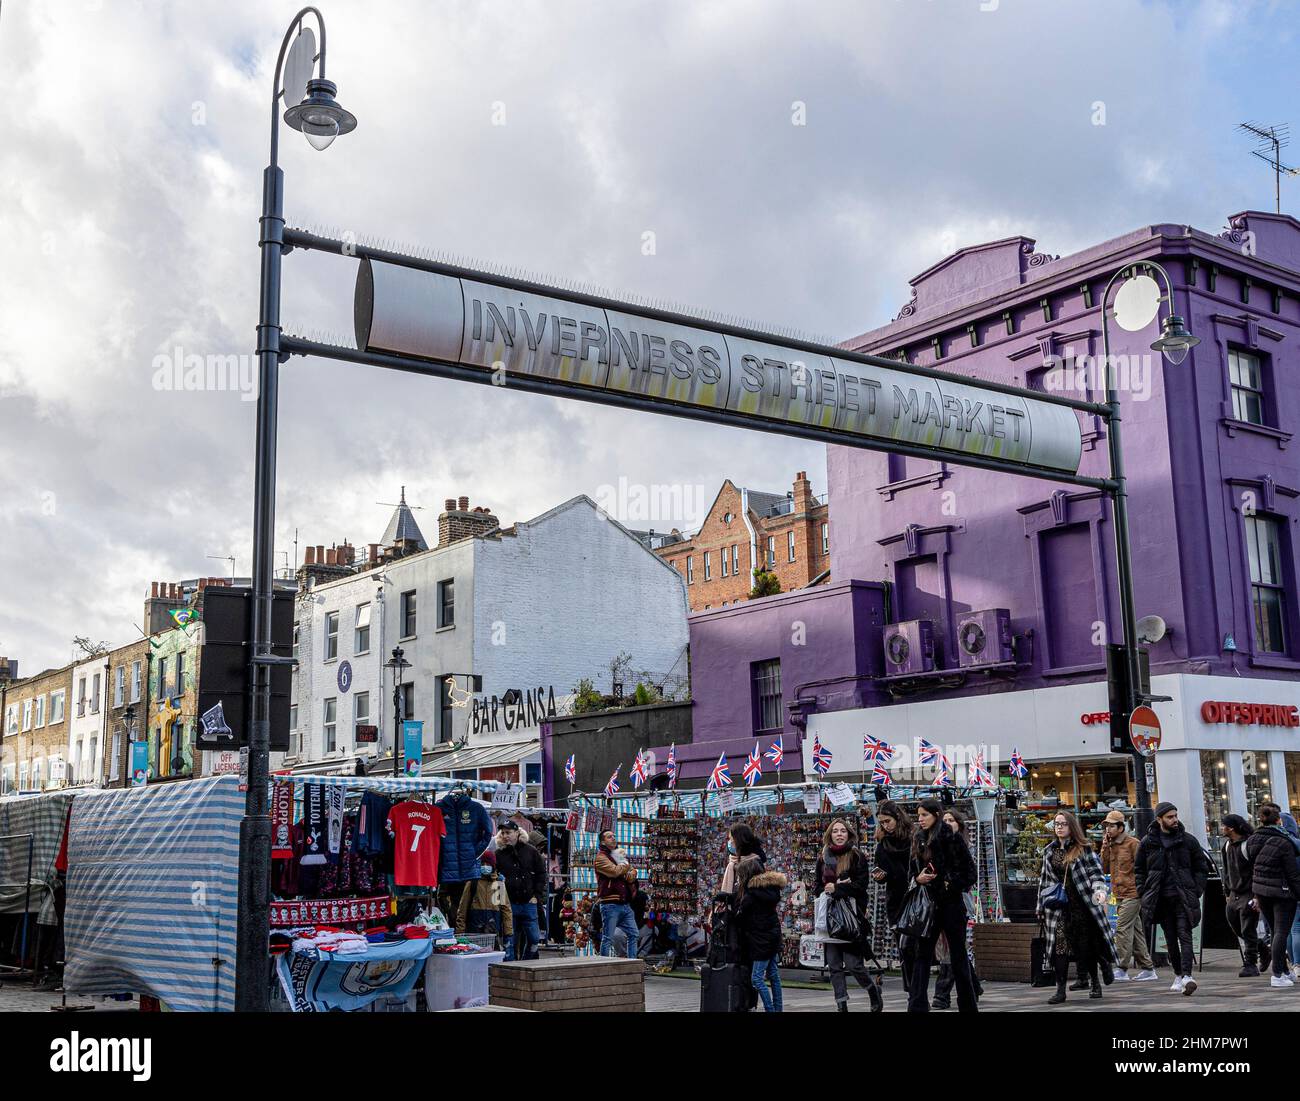 Inverness Street Market, Camden Town, London, England, U.K. Stock Photo